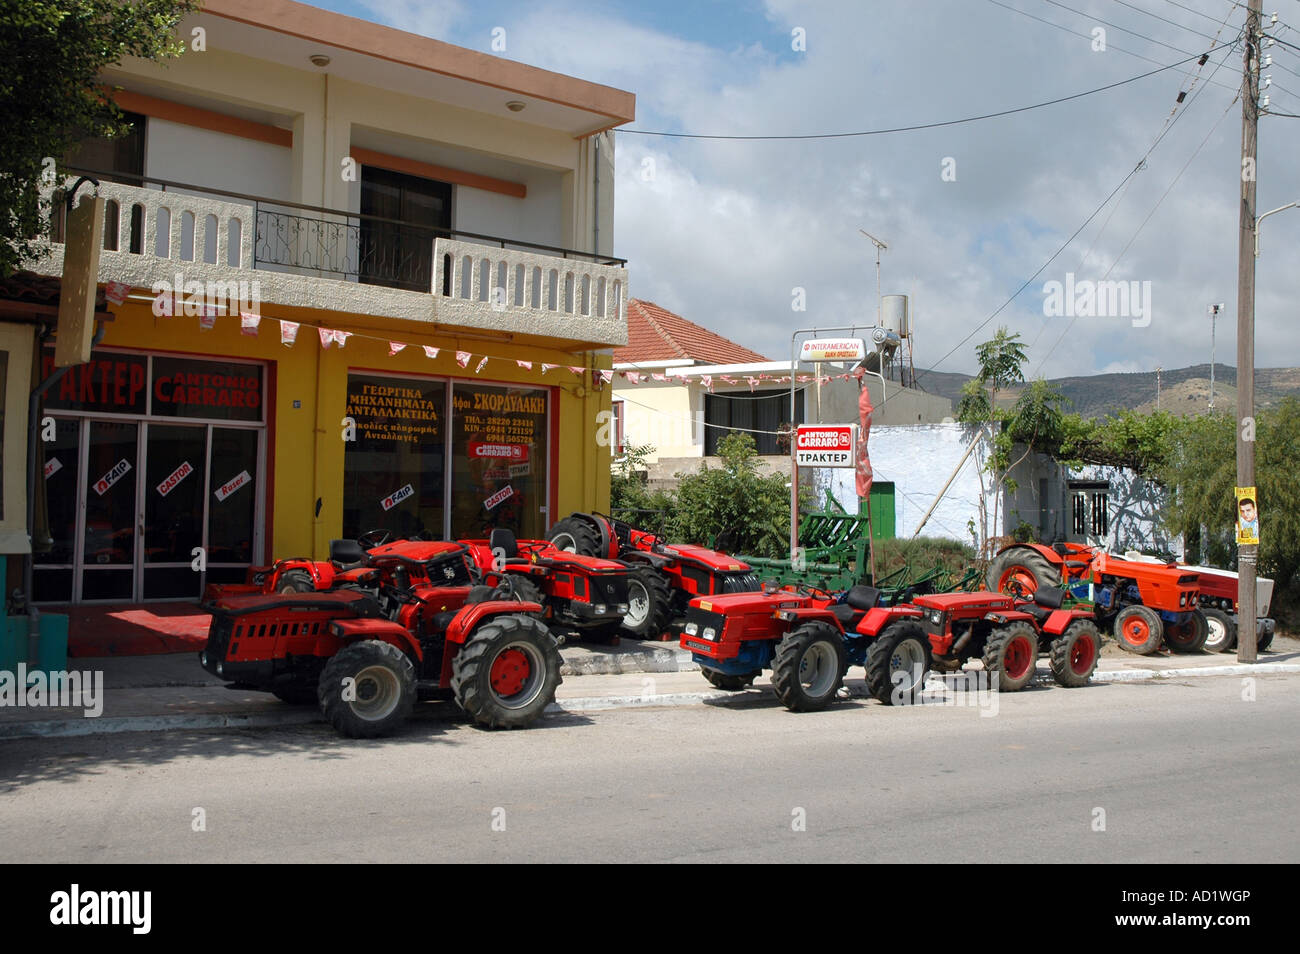 Shop with small Antonio Carraro compact tractors in Kissamos town, greek isle of Crete Stock Photo